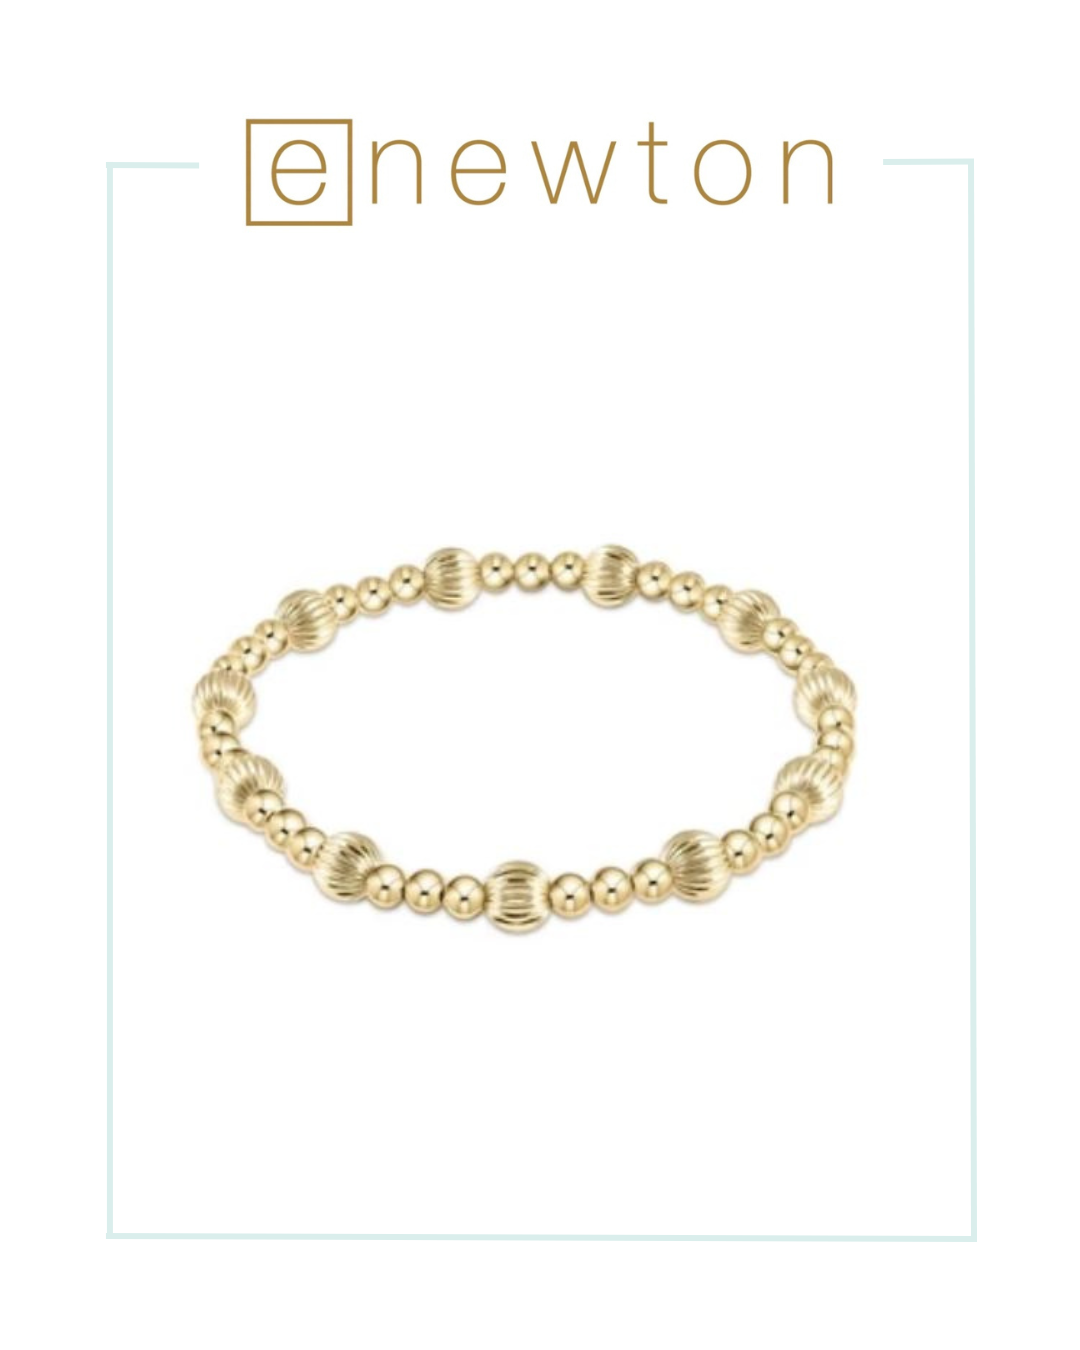 E Newton Dignity Sincerity Pattern 6mm Bead Bracelet - Gold-Bracelets-ENEWTON-The Village Shoppe, Women’s Fashion Boutique, Shop Online and In Store - Located in Muscle Shoals, AL.